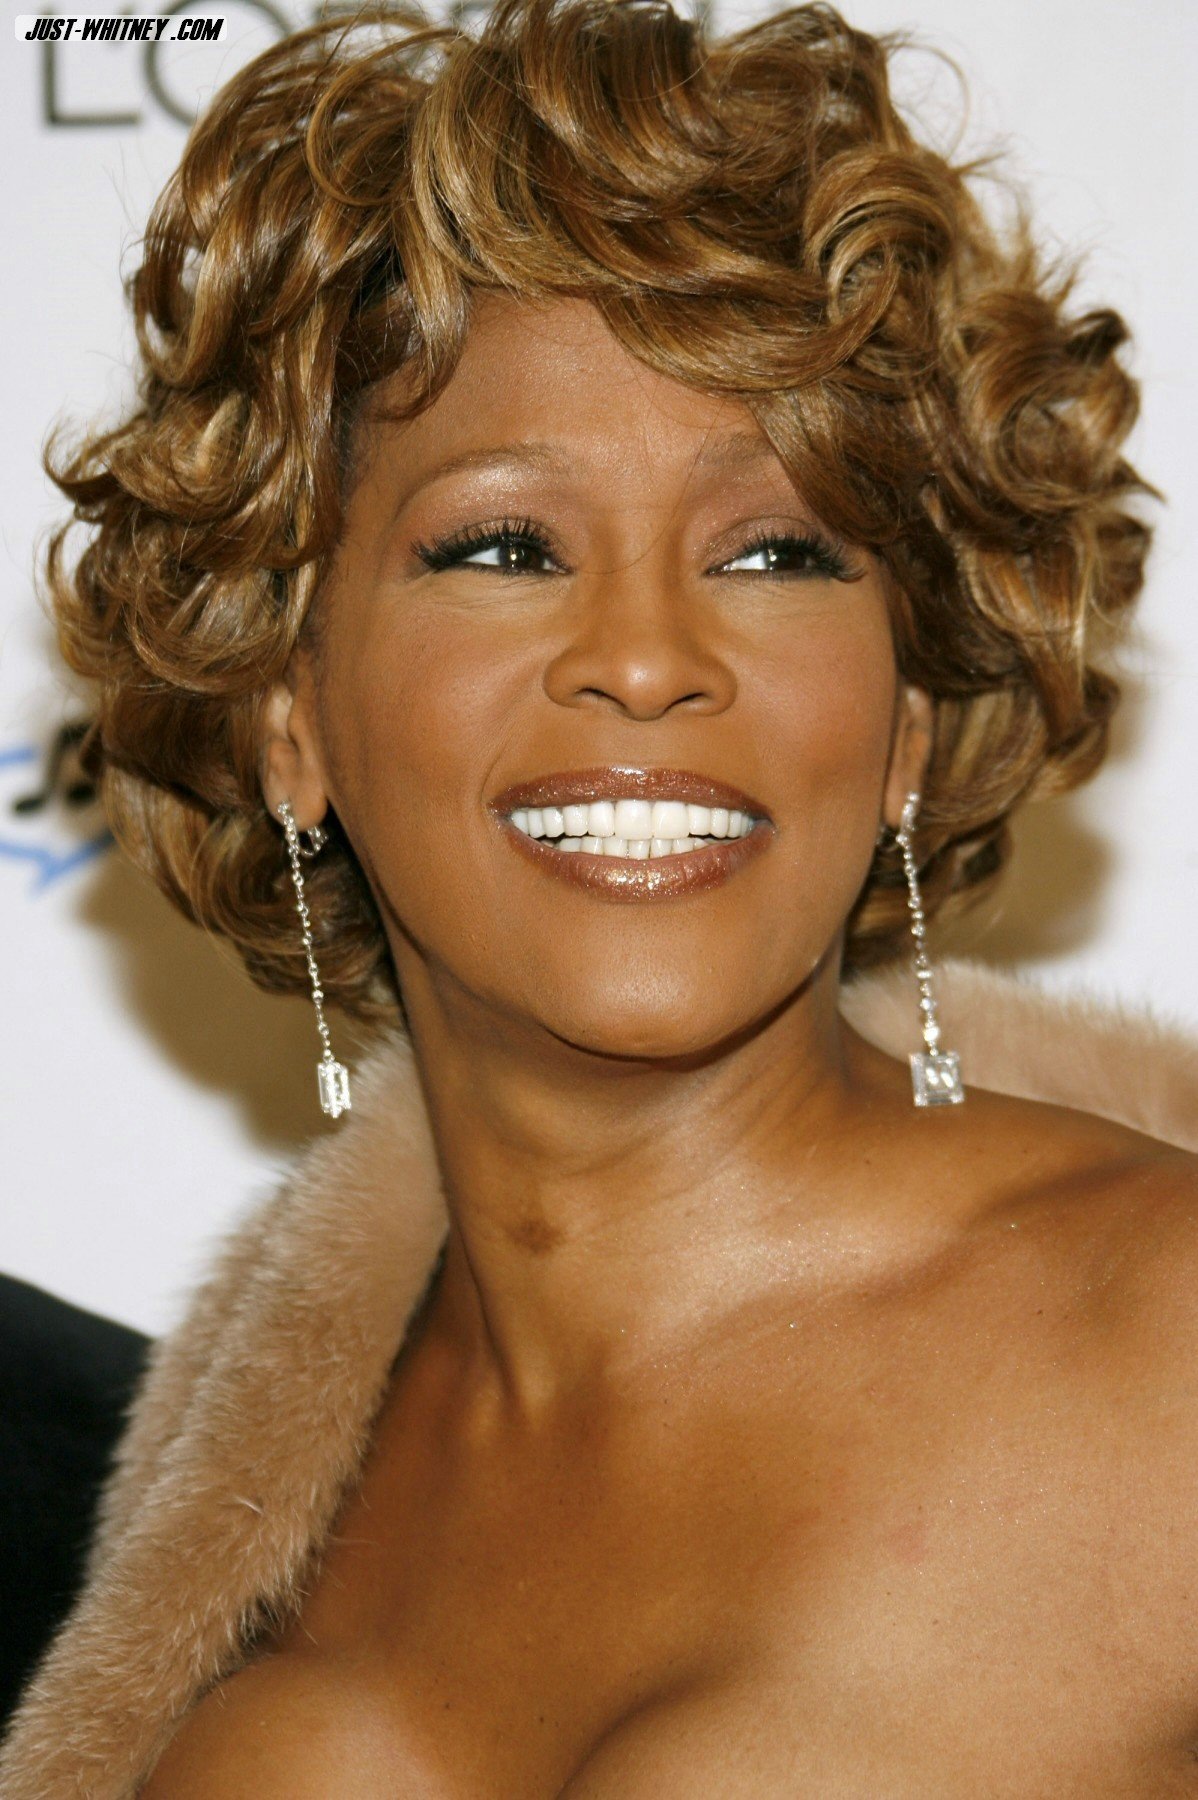 Whitney Houston leaked wallpapers